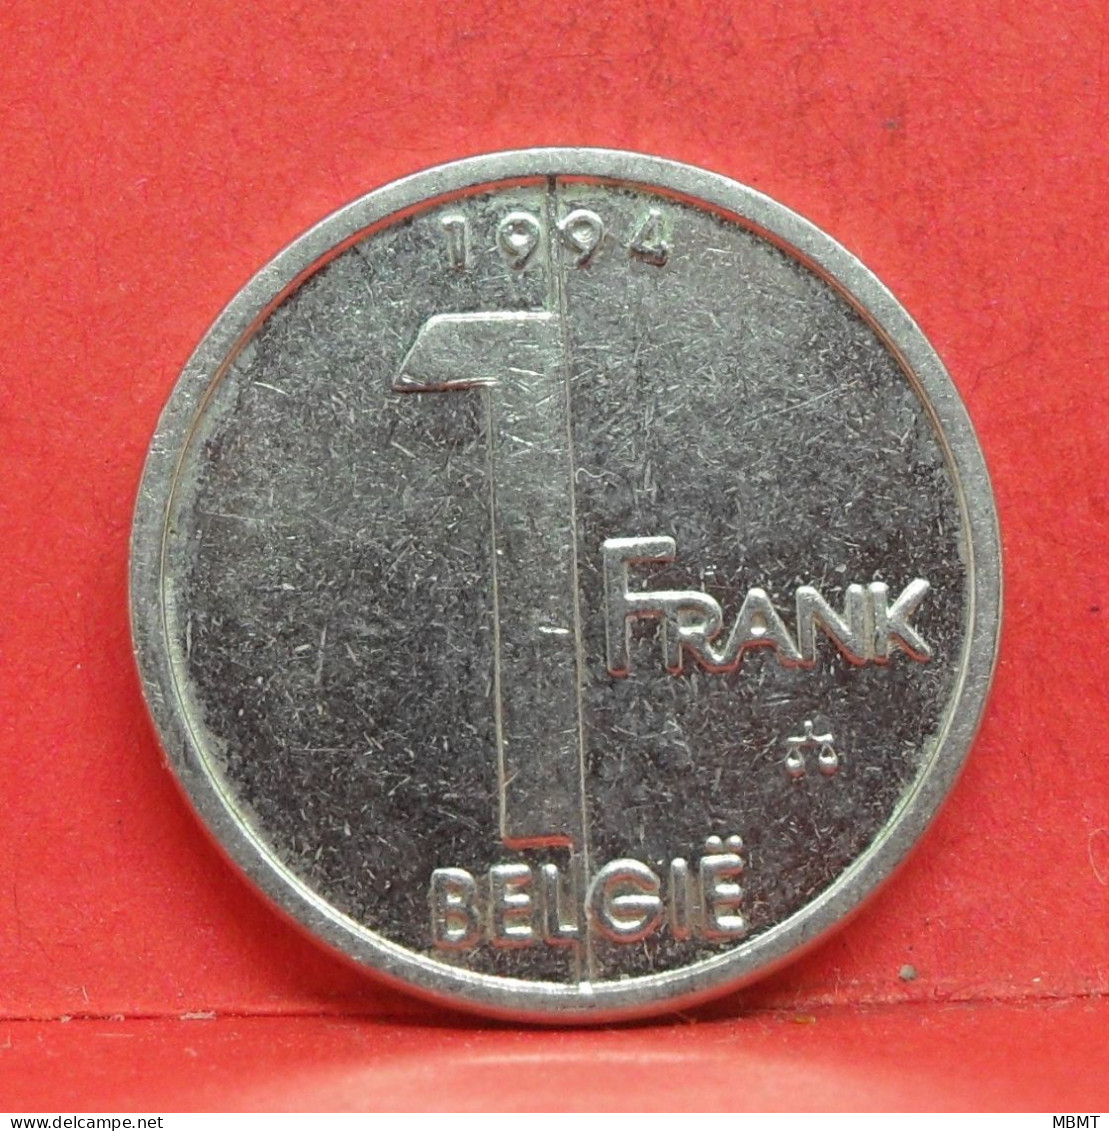 1 Frank 1994 - TTB - Pièce Monnaie Belgie - Article N°1968 - 1 Frank